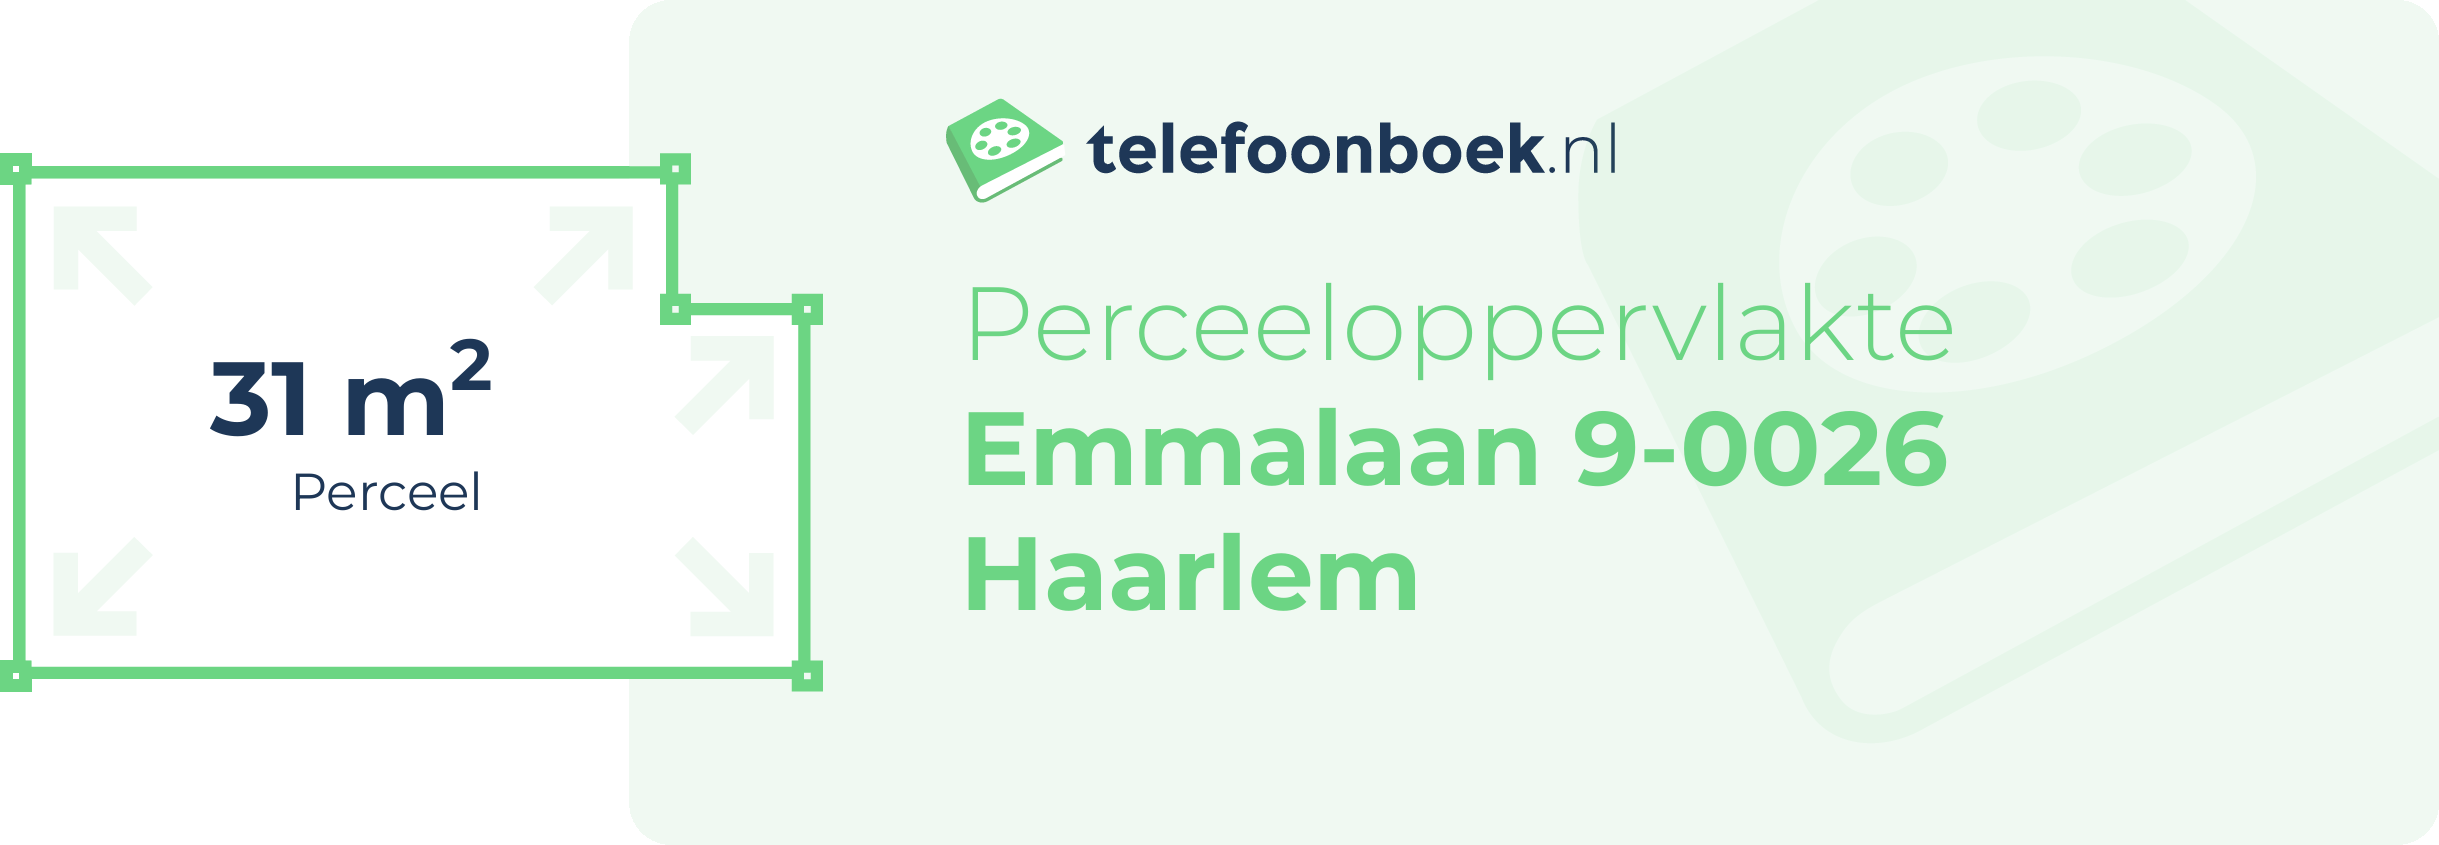 Perceeloppervlakte Emmalaan 9-0026 Haarlem